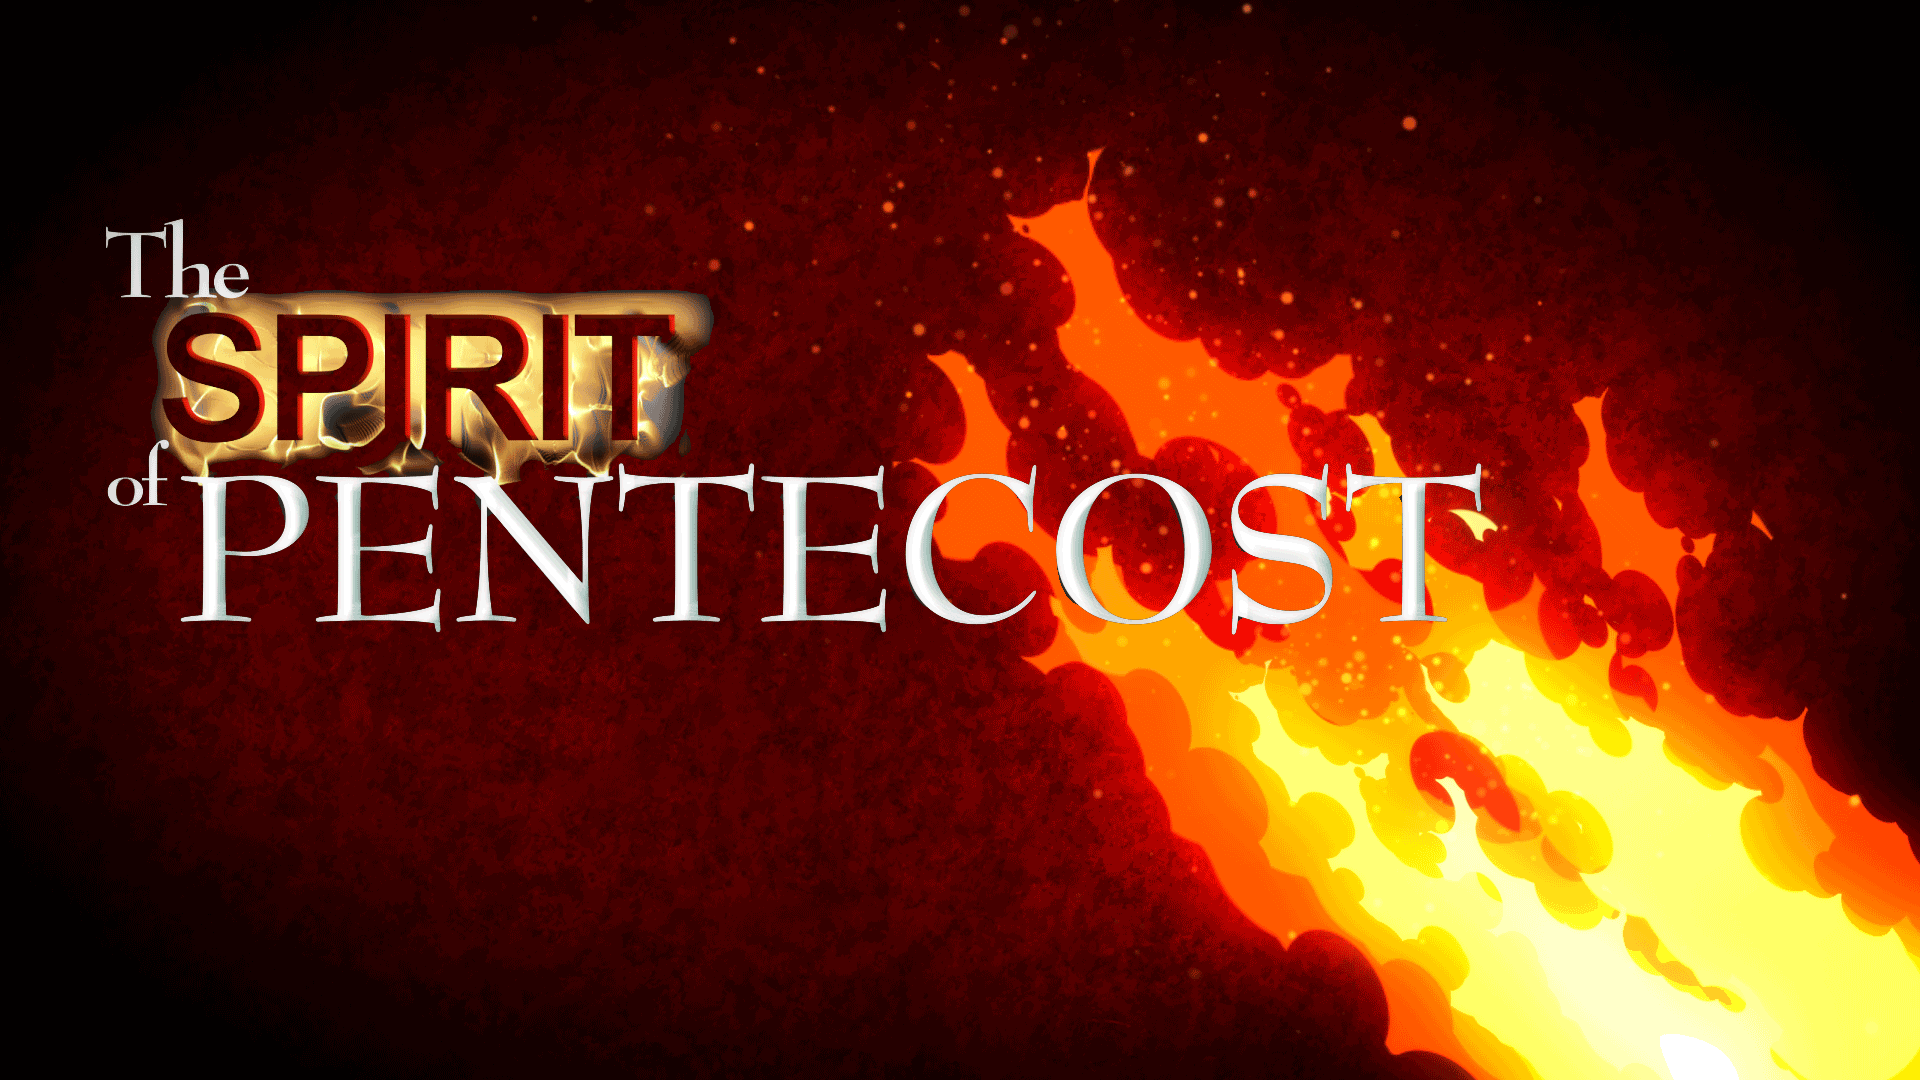 70+] Pentecost Wallpaper on WallpaperSafari